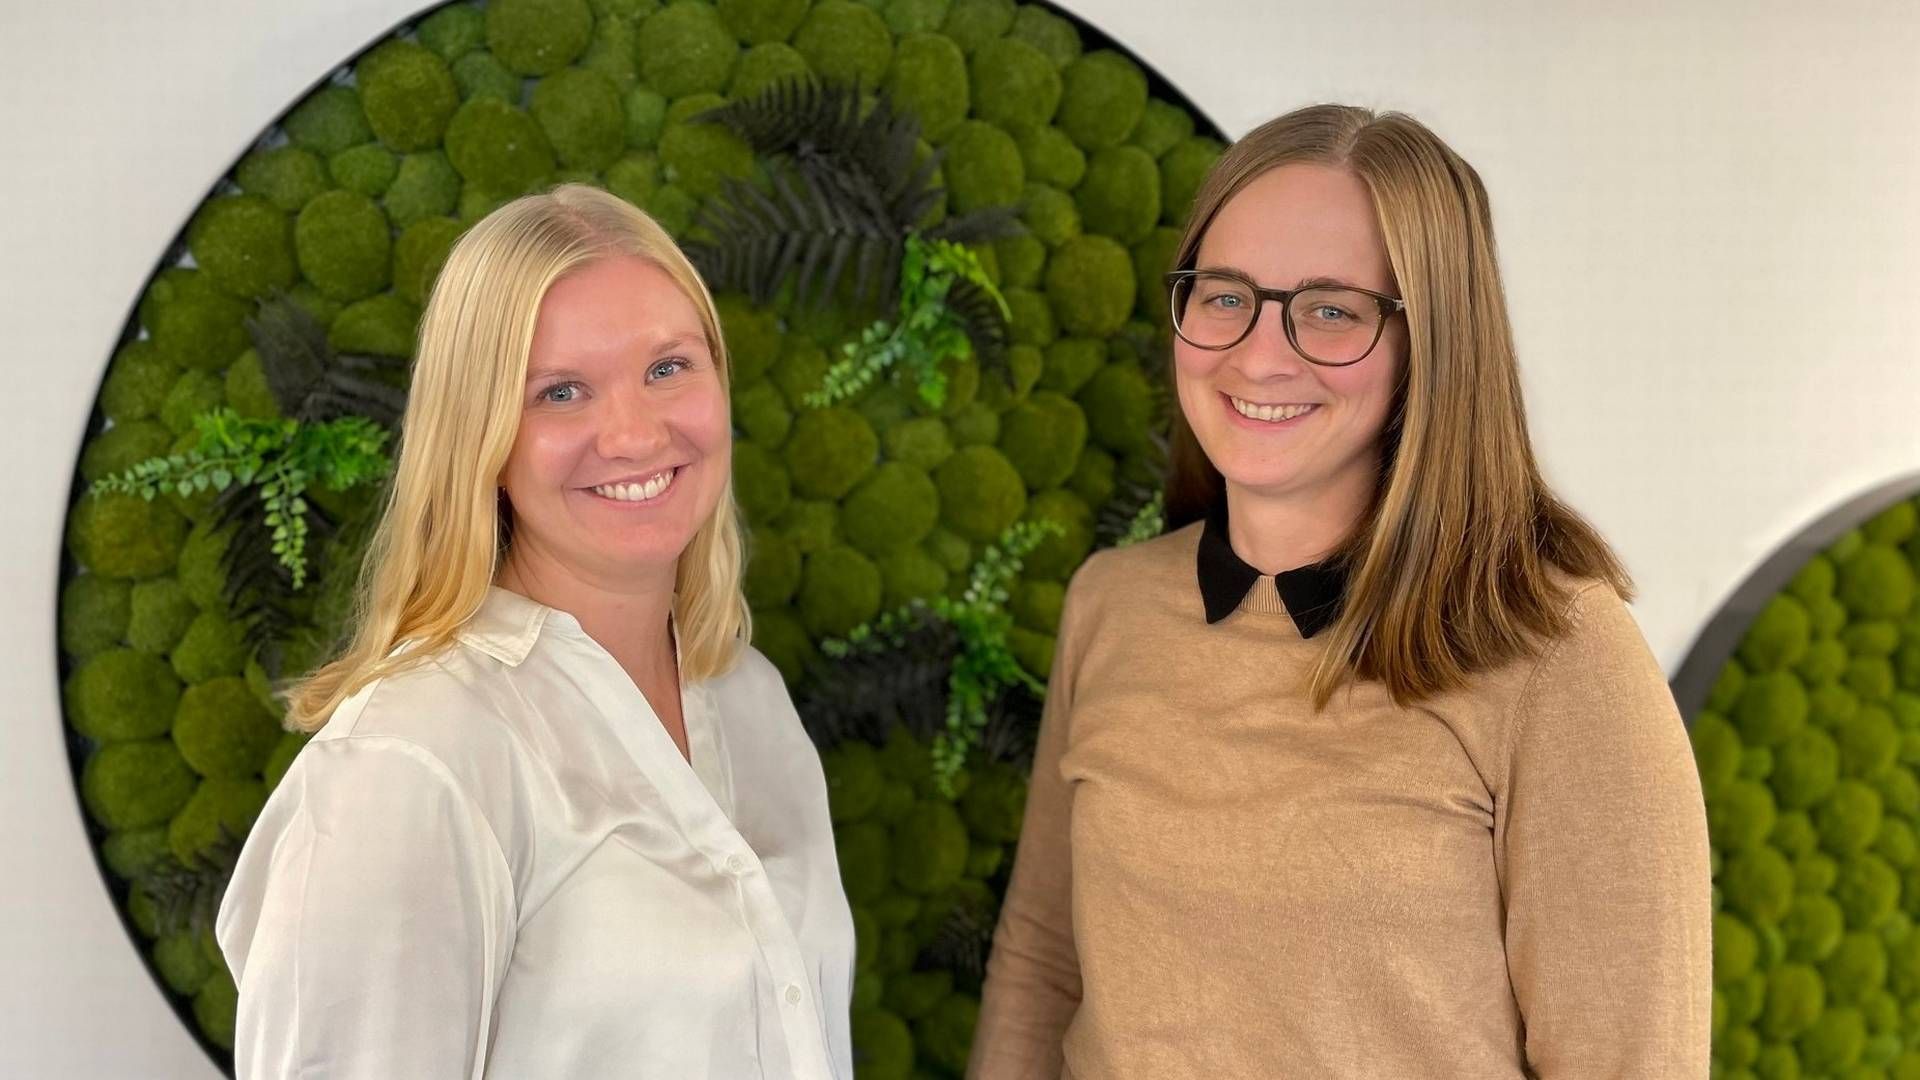 Advokatfullmektige Edeline Tveiten (t.v.) og advokat Anja Flo Lauvik er på plass hos Haakstad & Co. | Foto: Haakstad & Co